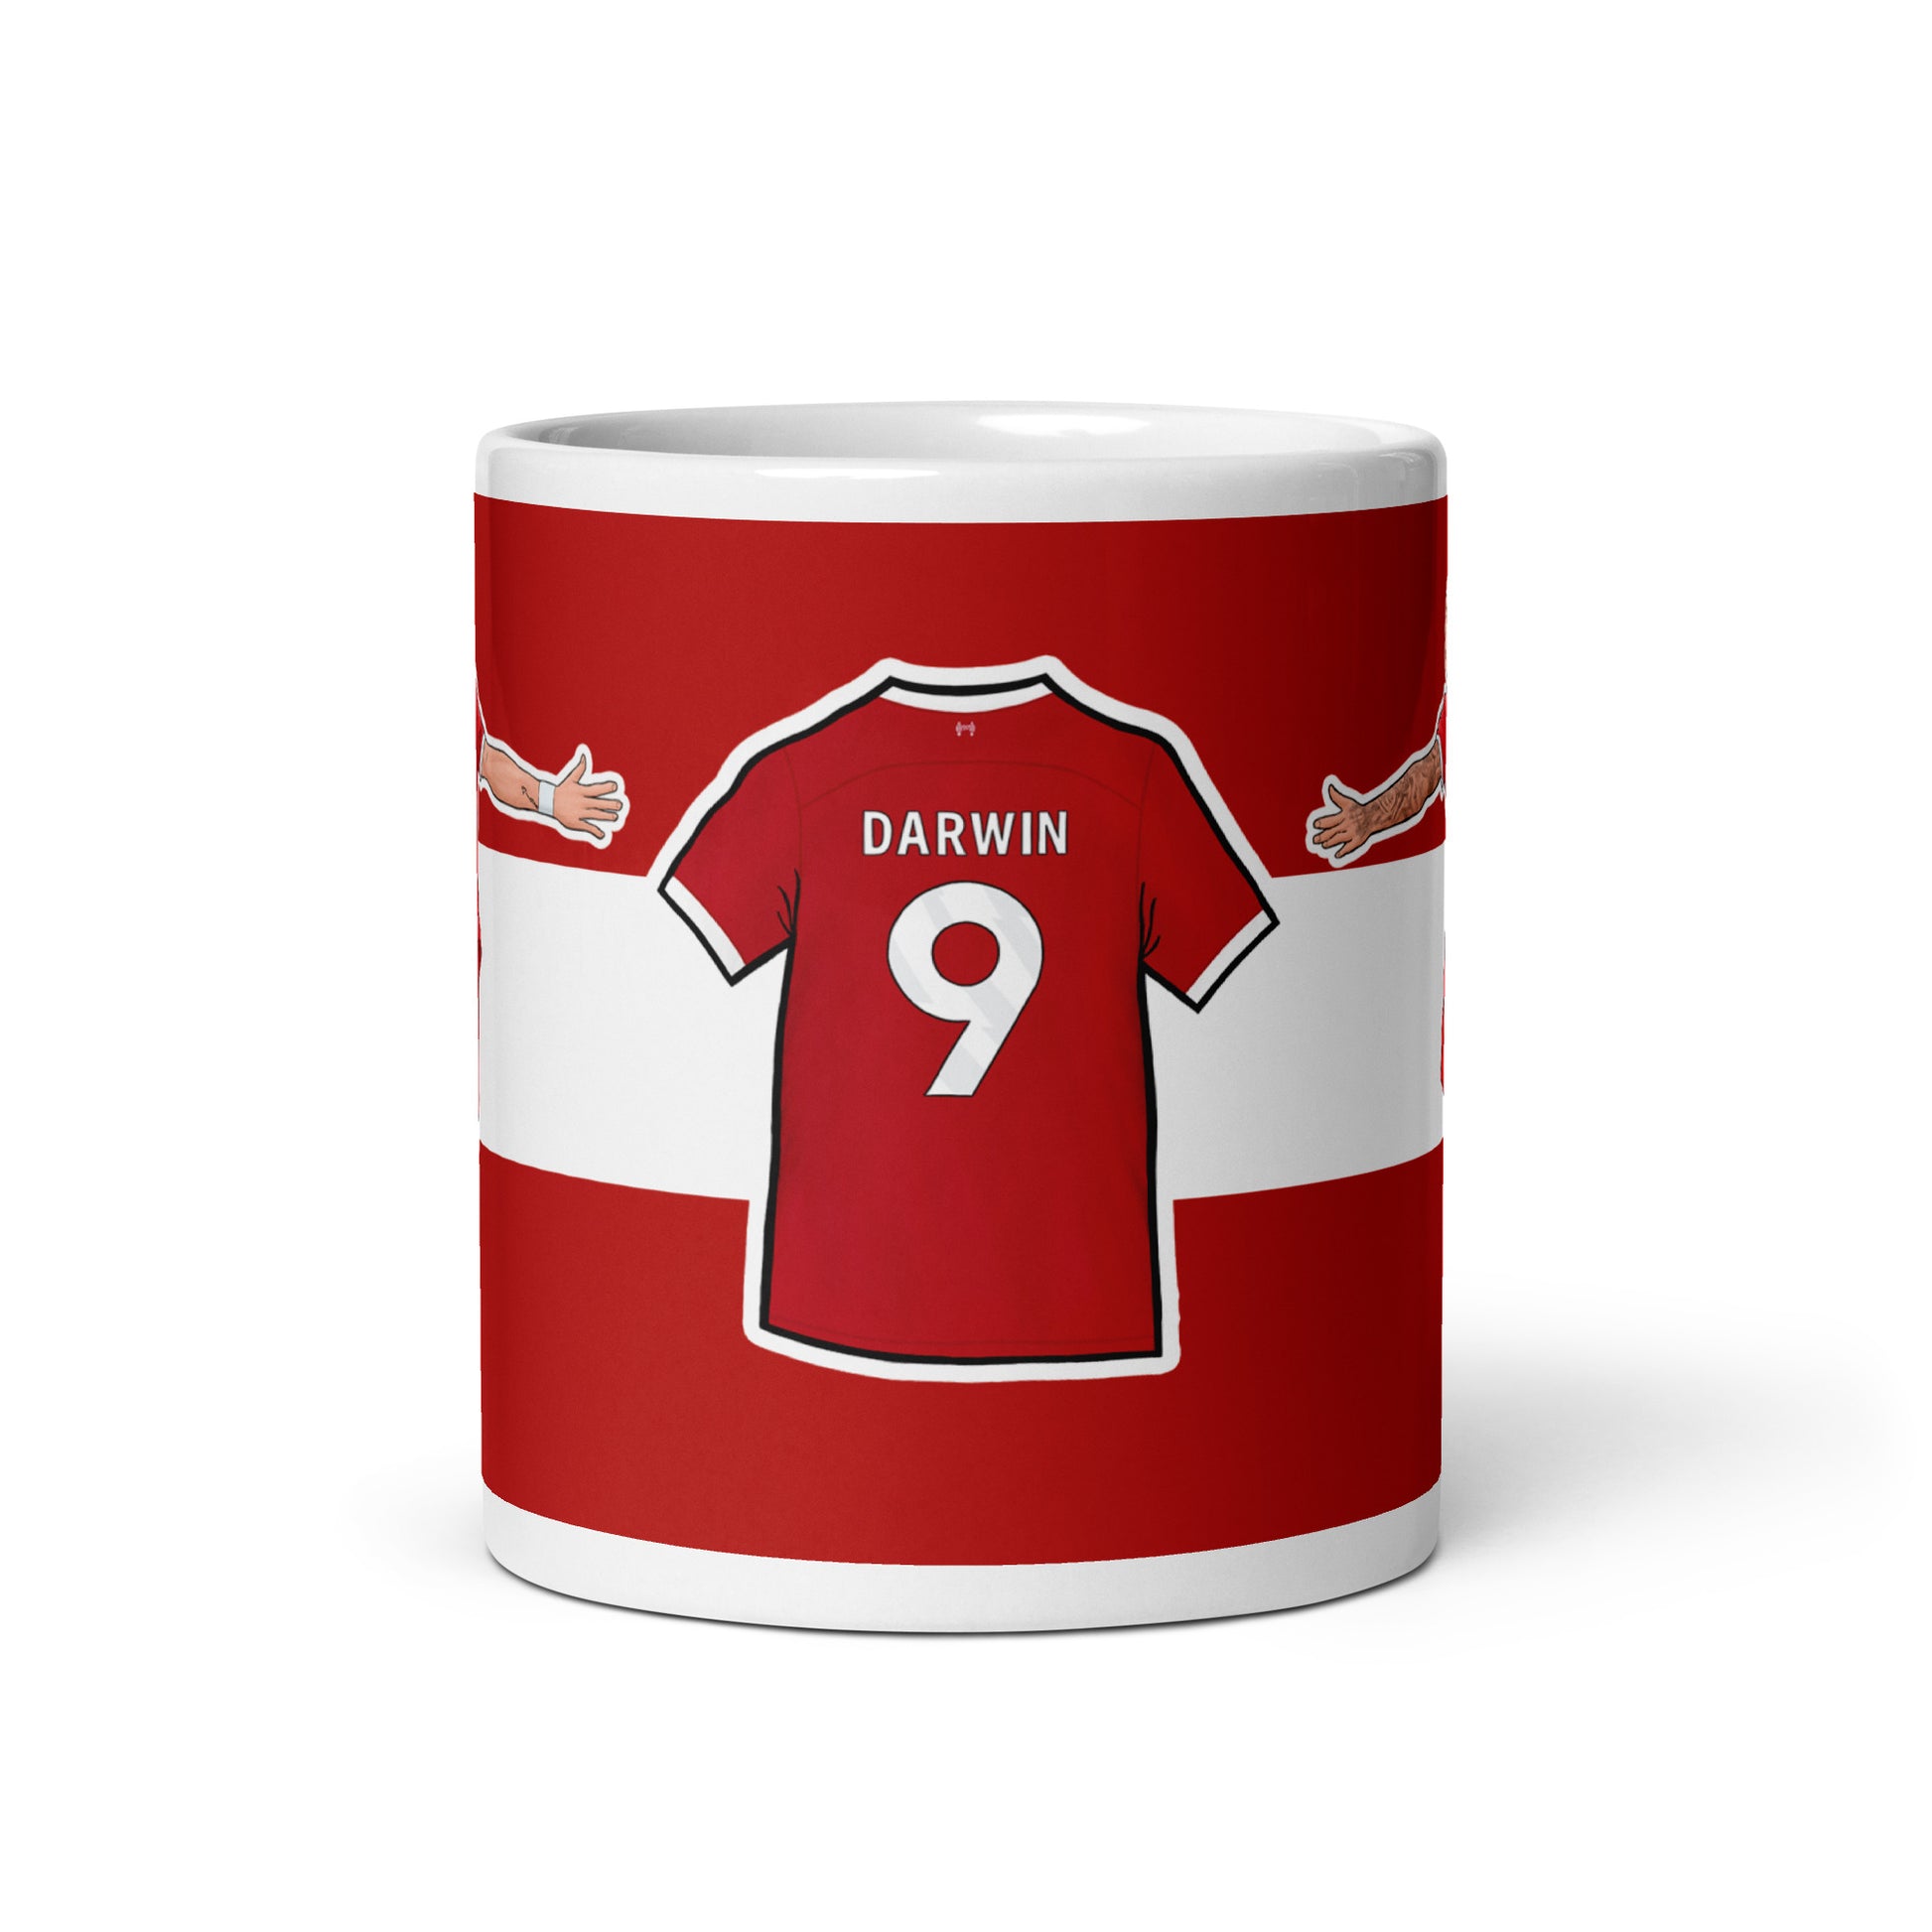 Mug featuring artwork inspired by Liverpool FC player Darwin Nunez